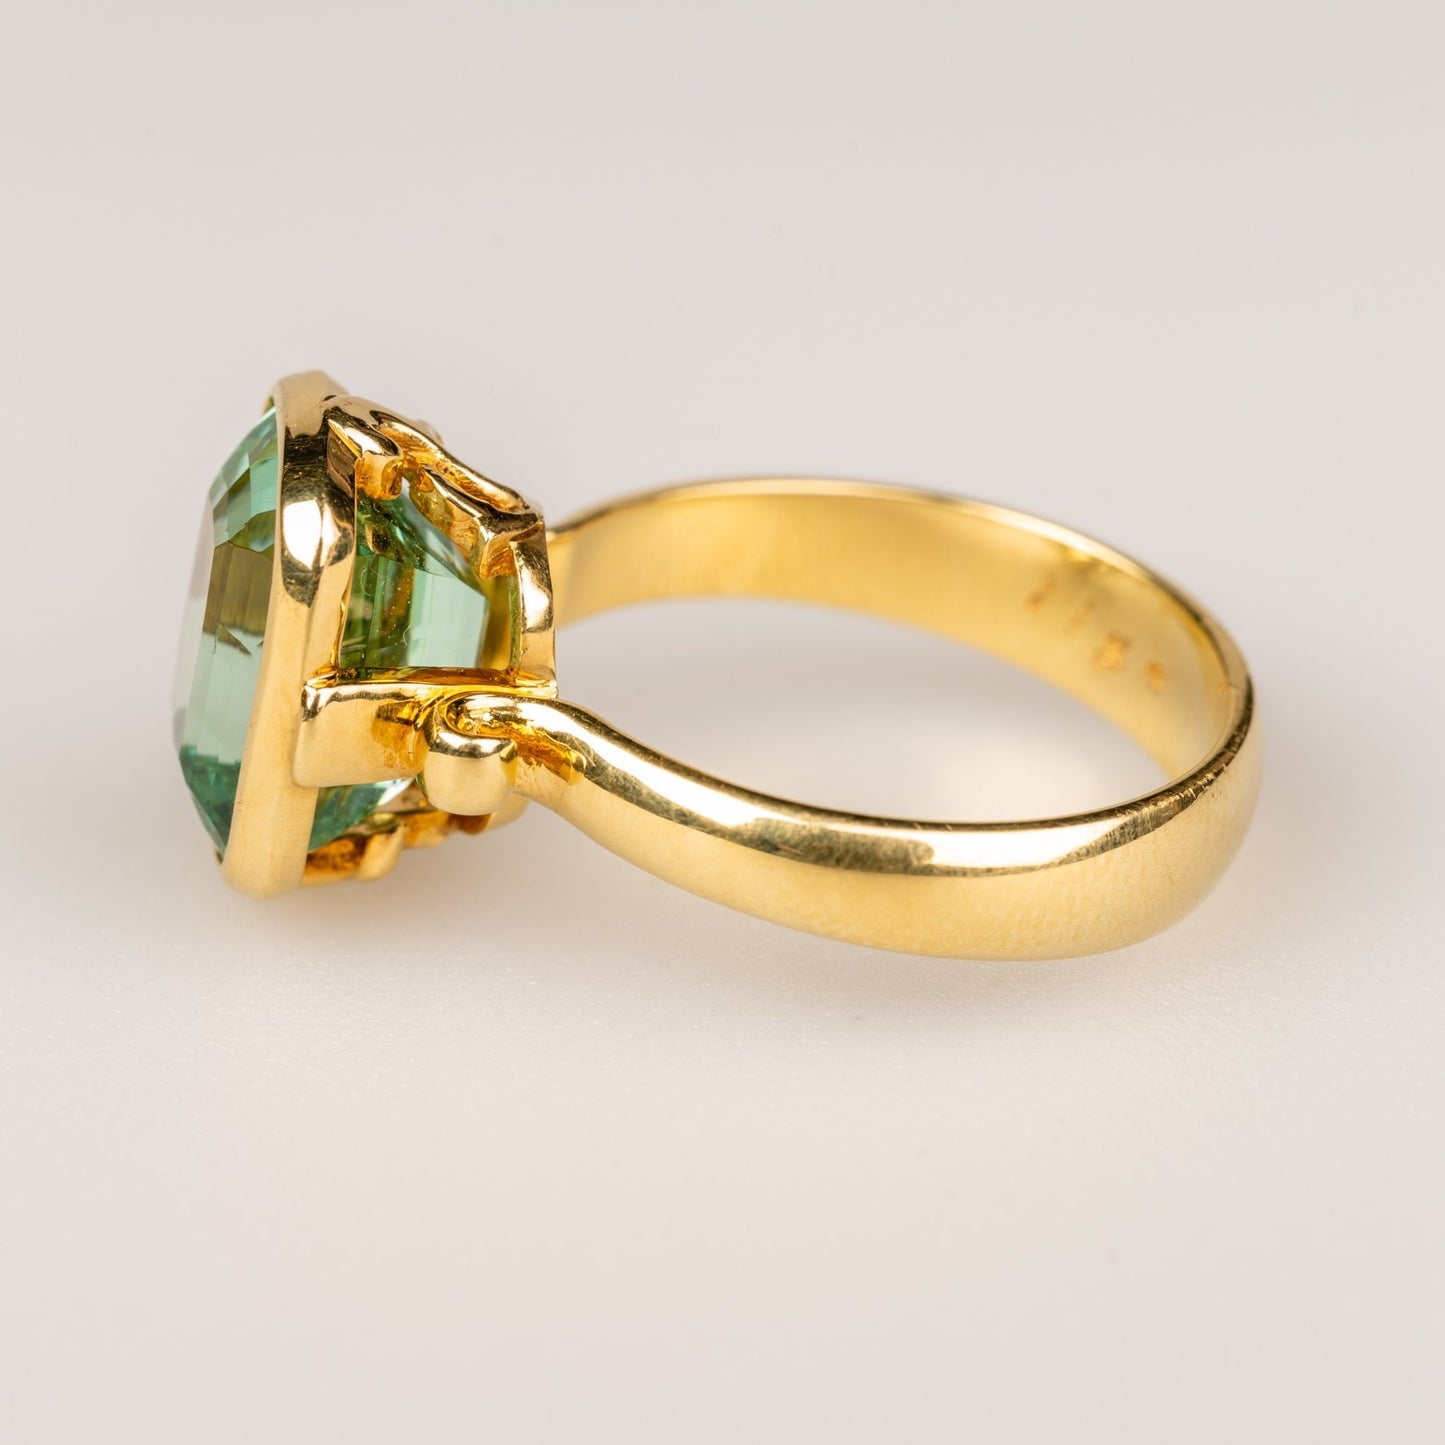 Mint Green Tourmaline Ring